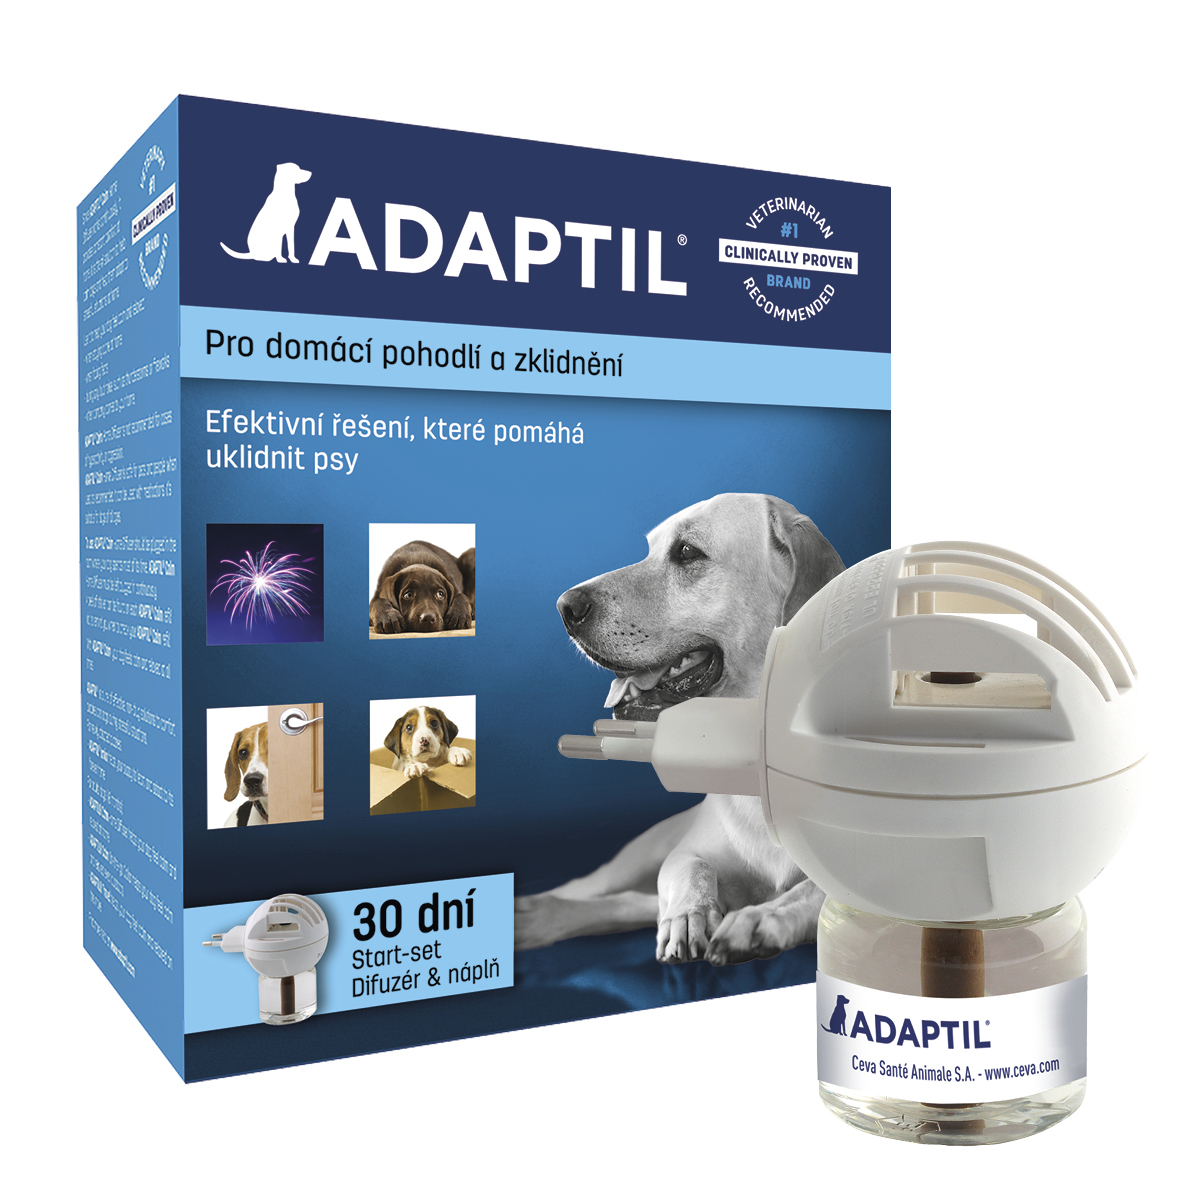 Adaptil Difuzér a náplň pro psy 48 ml Adaptil